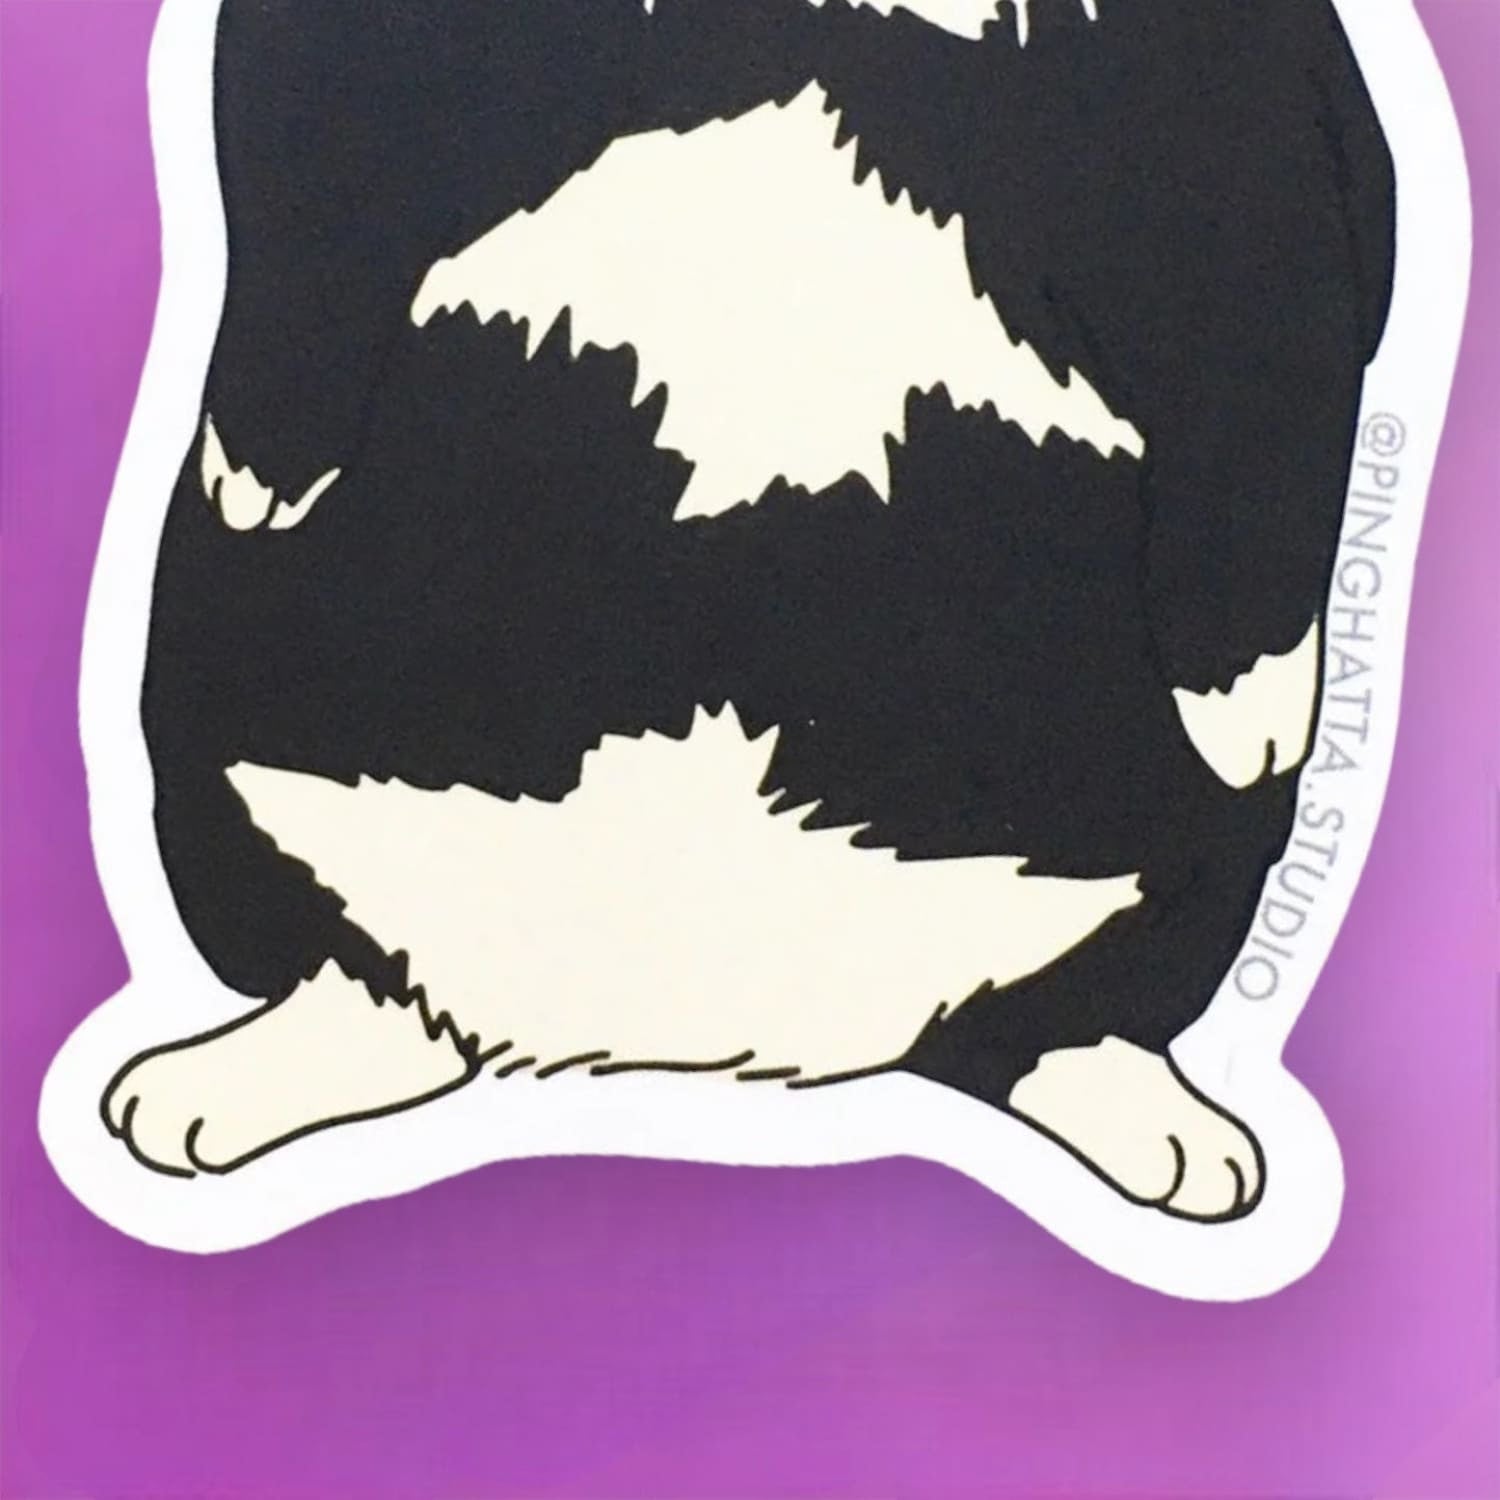 Ping Hatta Sticker - Standing Cat Animal Novelty - Cat